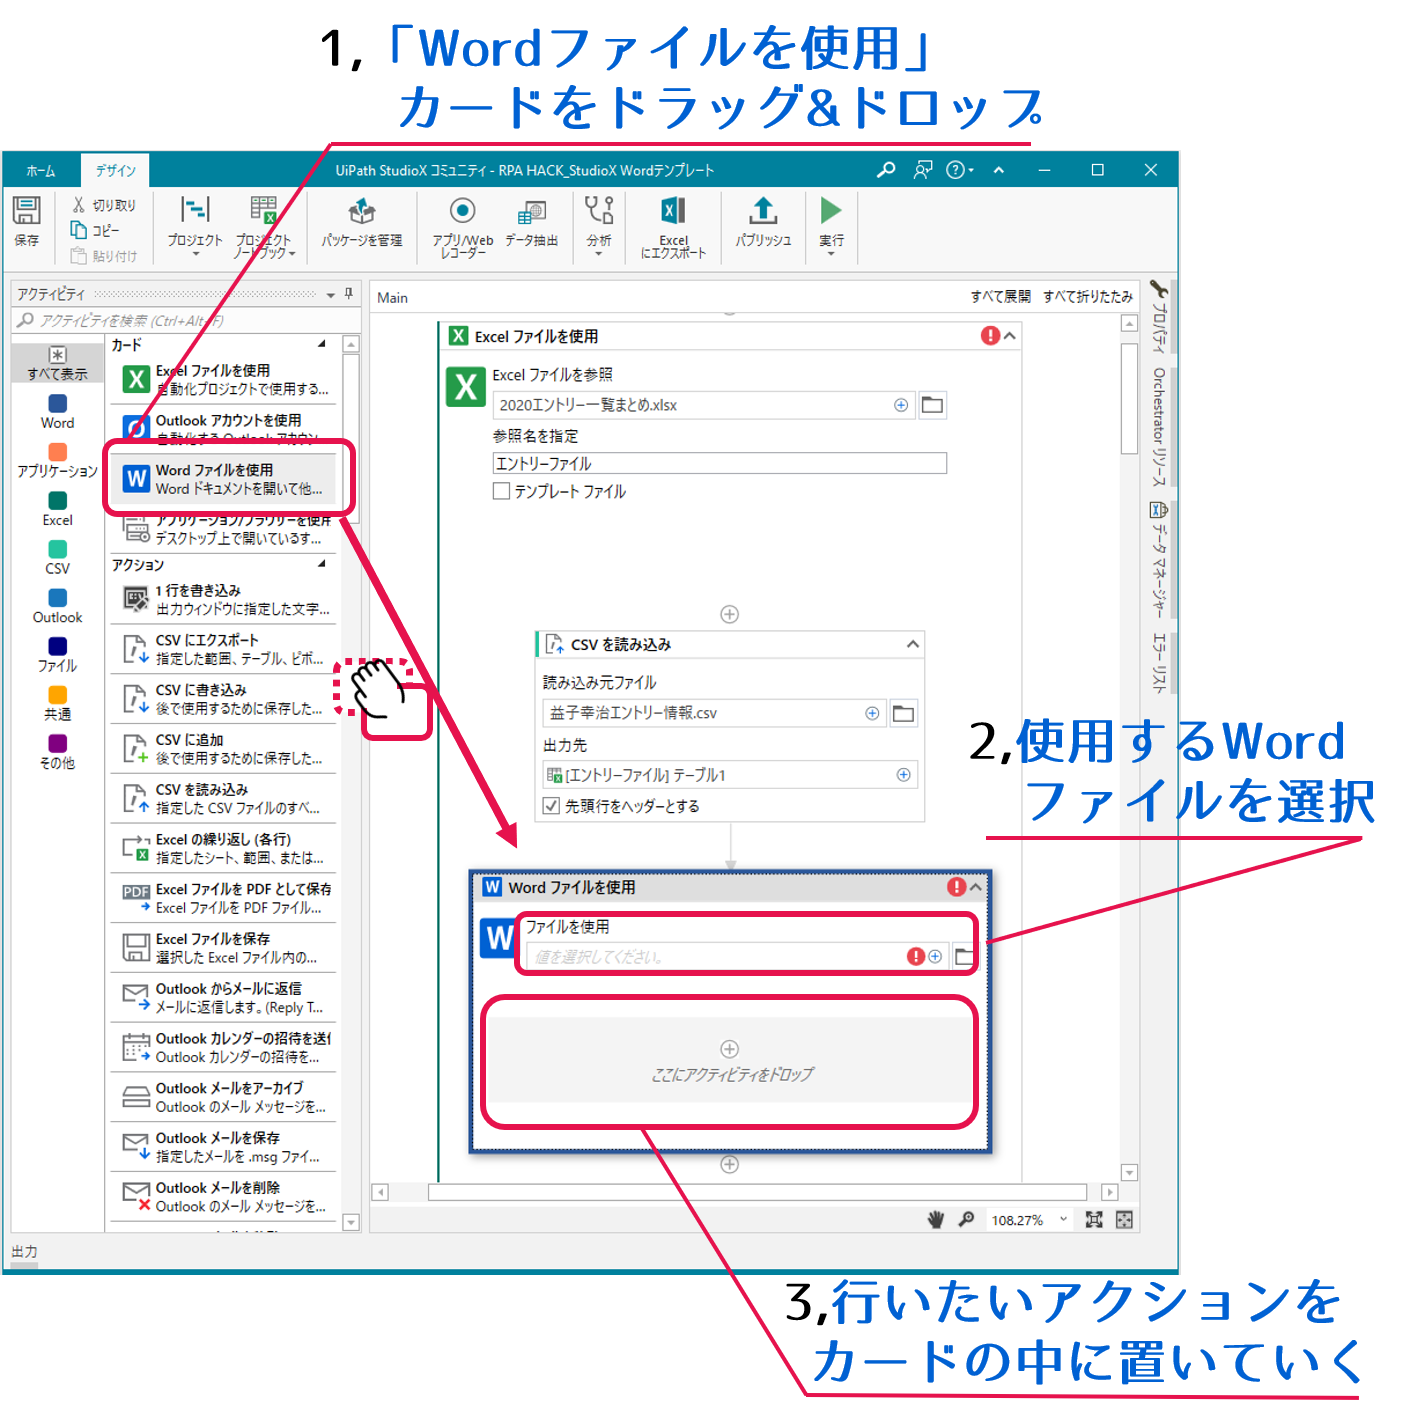 Uipath Studioxでcsv Word Outlookメールを自動化できる 使い方を簡単に解説 Rpa Hack